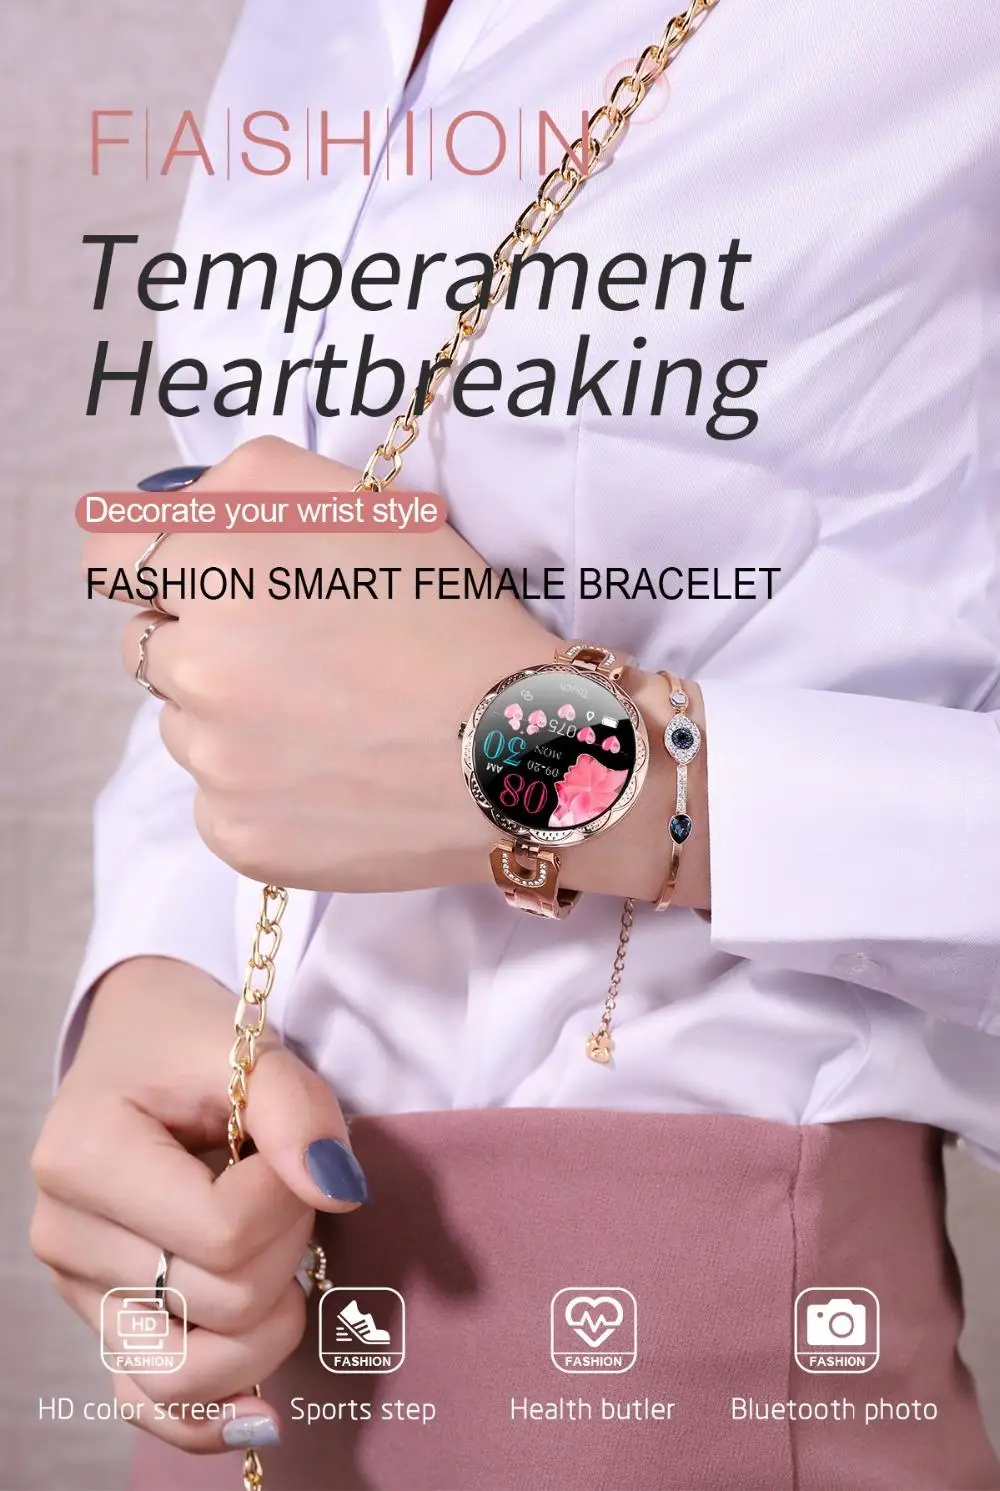 Virtoba AK15 Smart Watch Women 2019 New Heart Rate Monitor Blood Pressure Bracelet IP67 Waterproof Watch For Android iOS Phone (3)